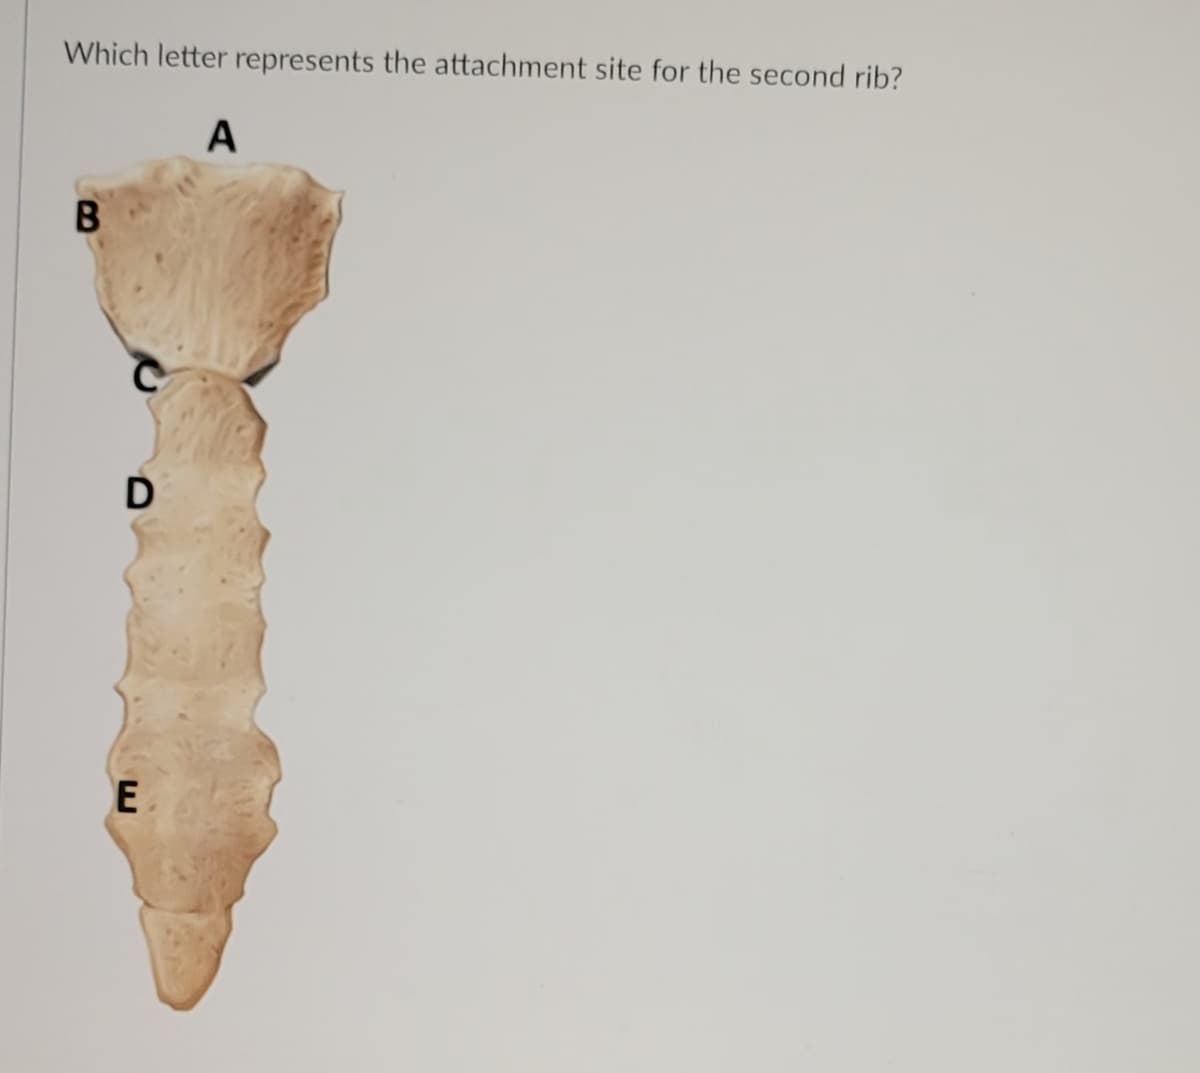 Which letter represents the attachment site for the second rib?
A
B
D
E